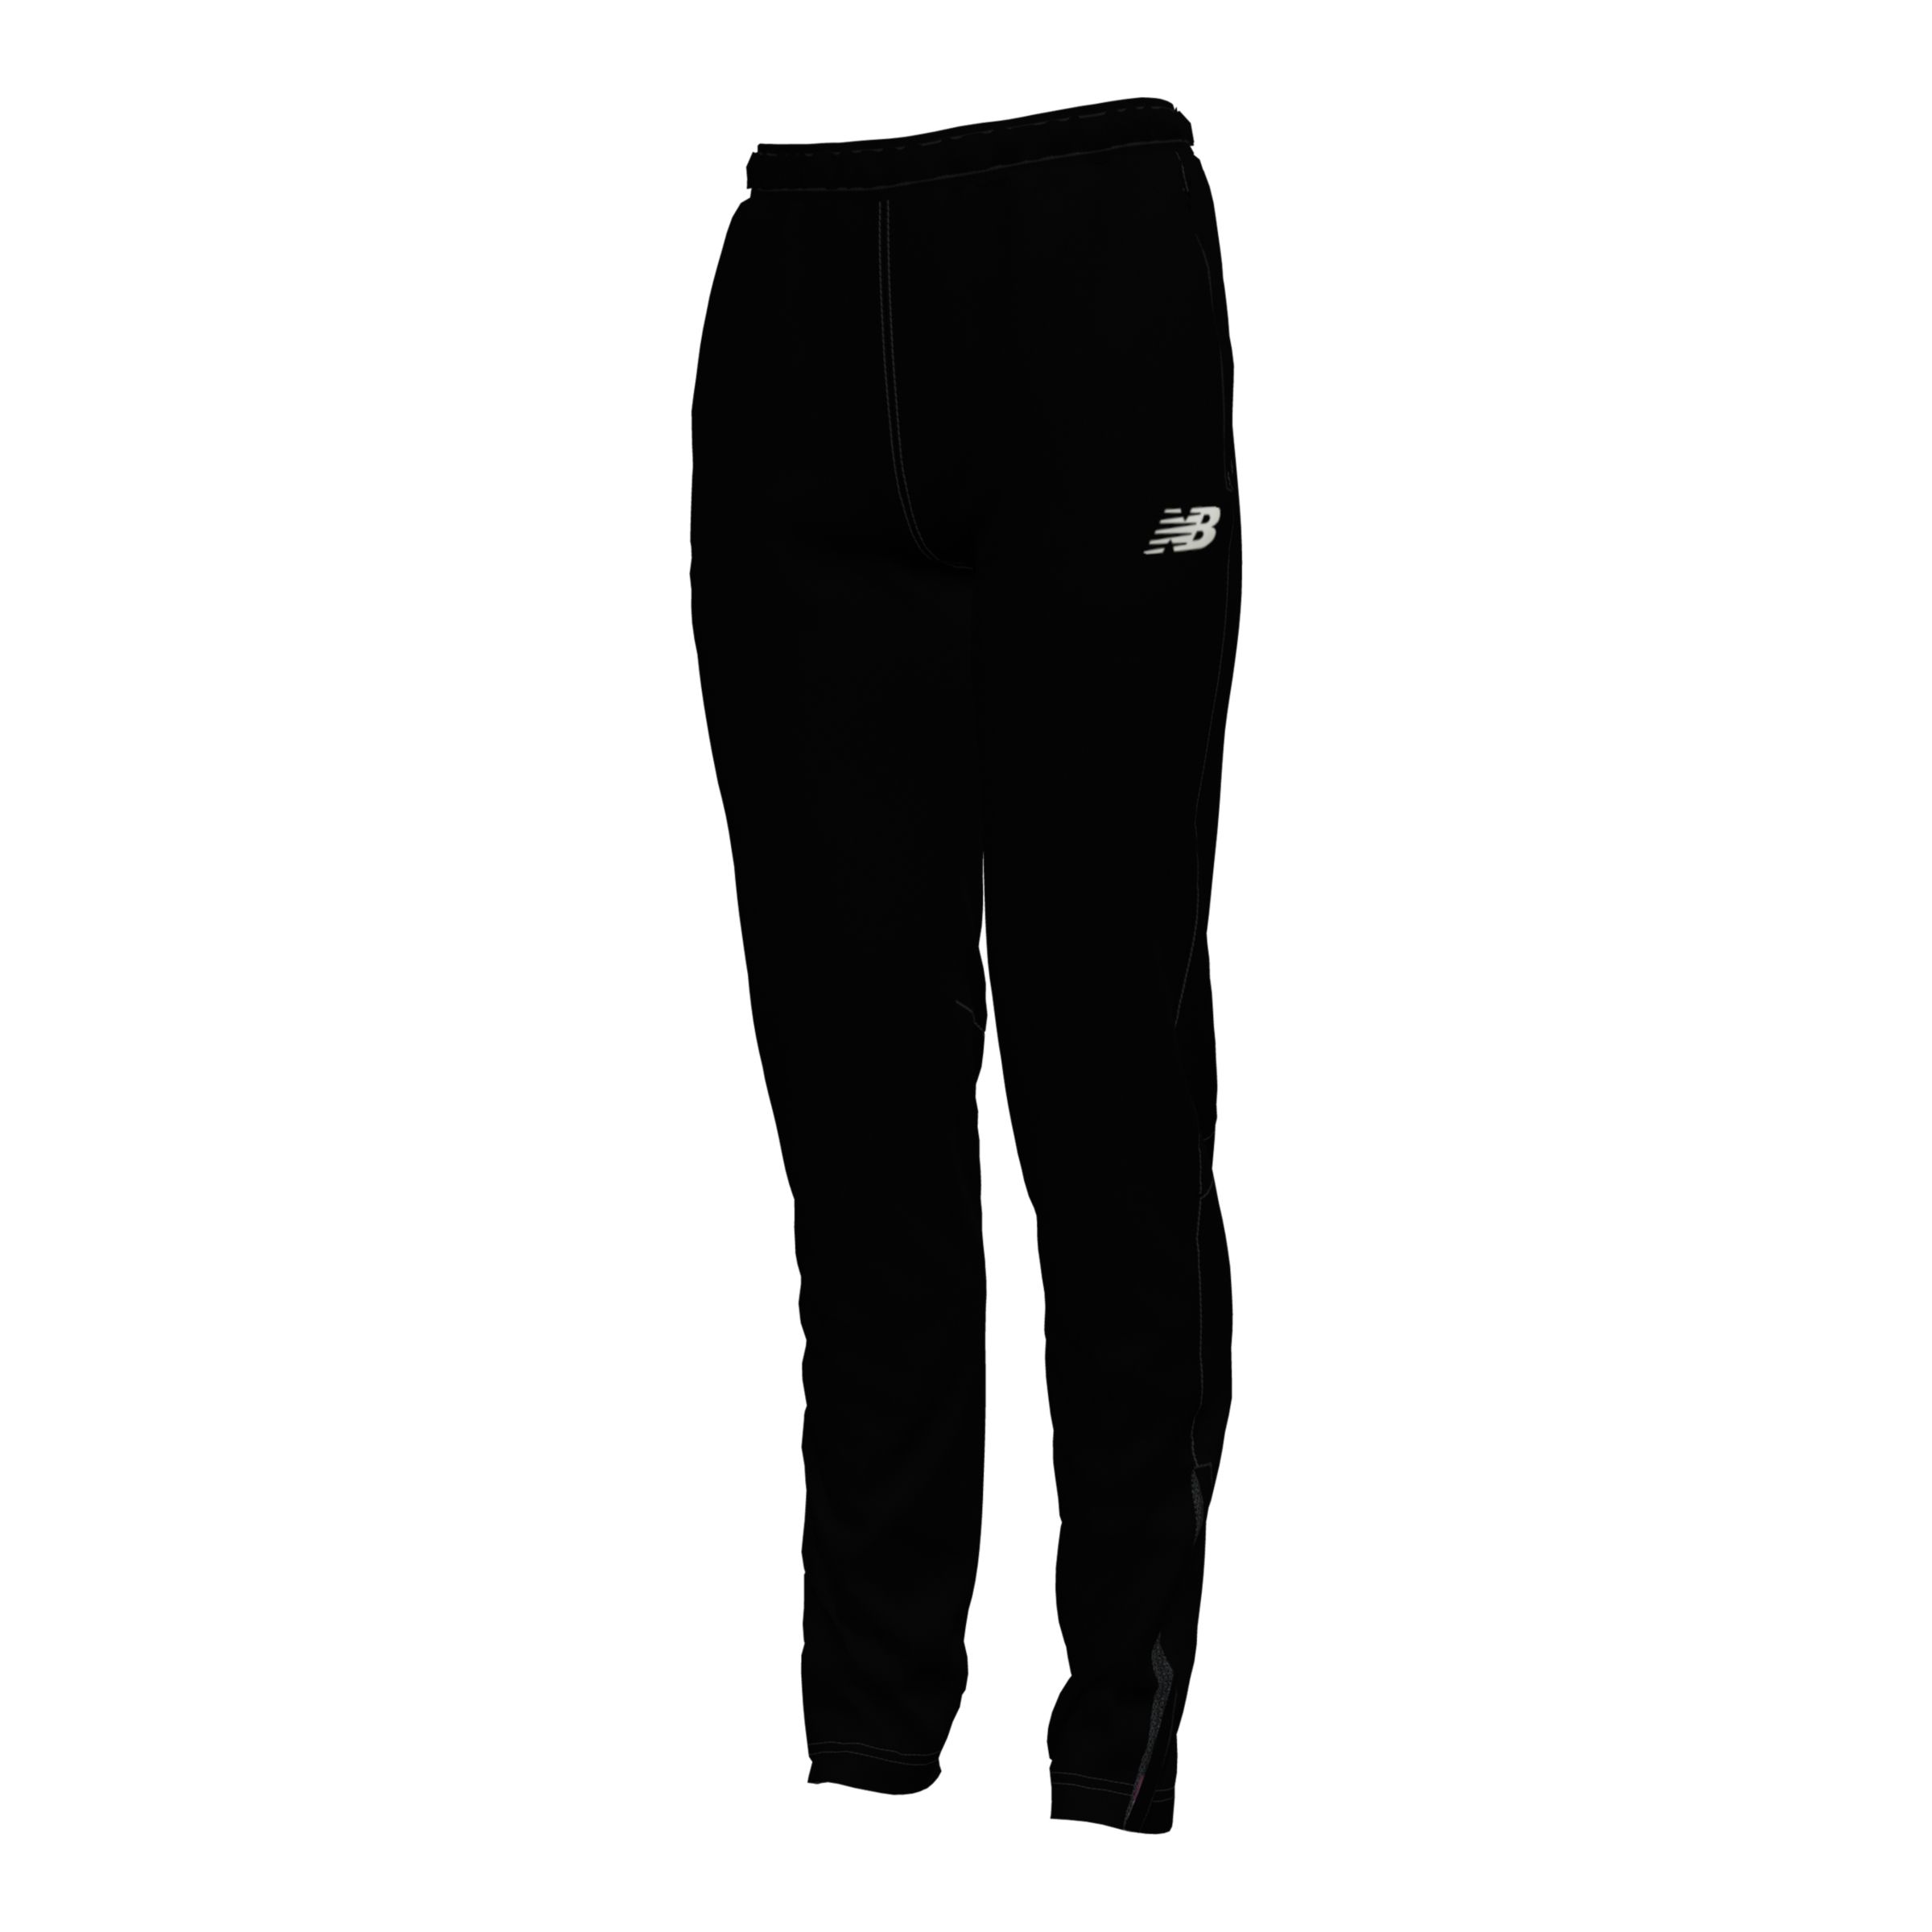 Buy New Balance women sportswear fit training sweatpants dark grey